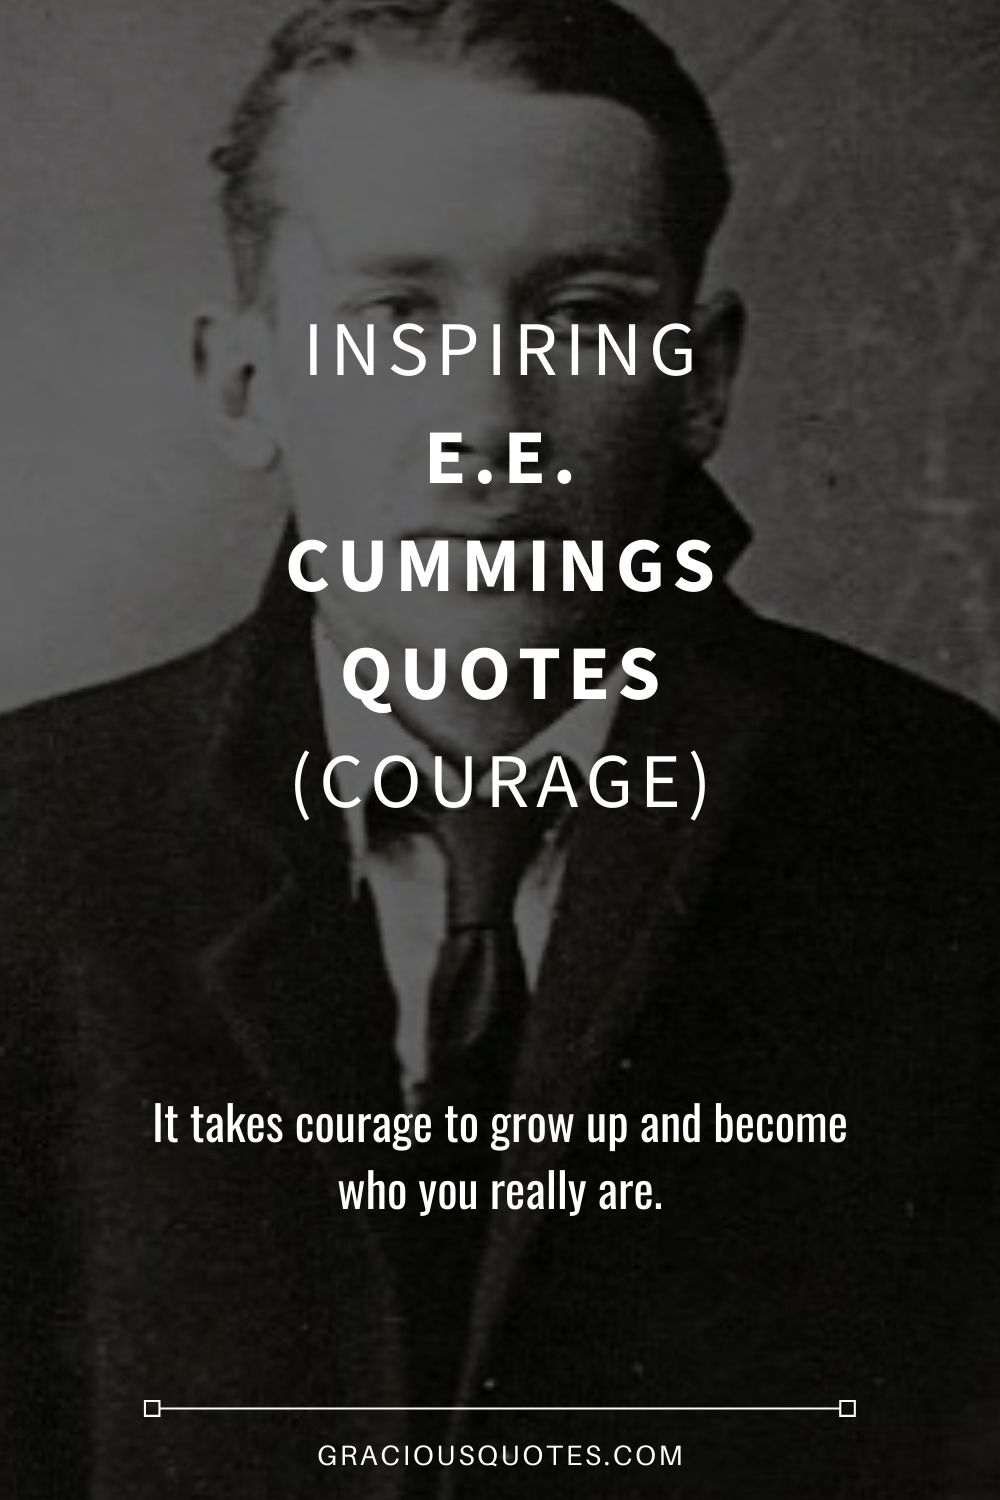 Inspiring E.E. Cummings Quotes (COURAGE) - Gracious Quotes